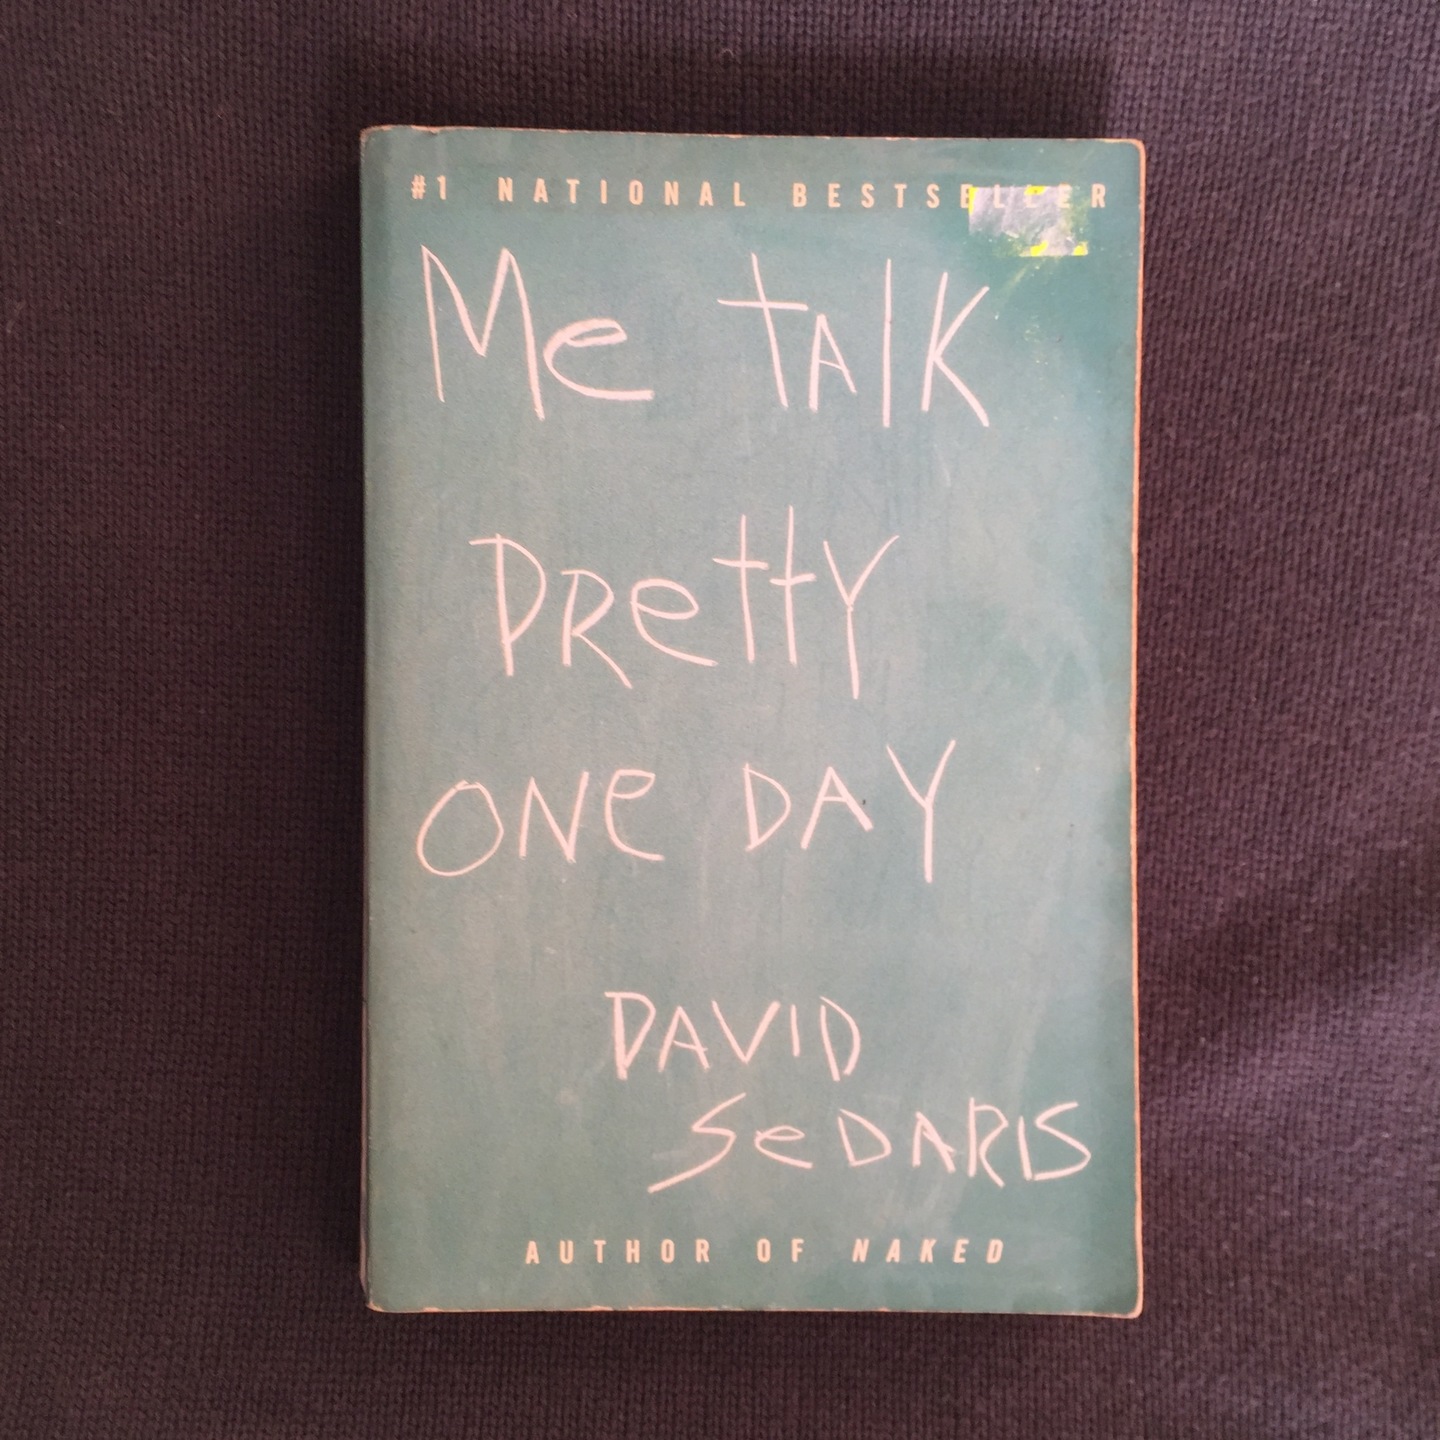 Me Talk Pretty One Day by David Sedaris [Paperback]